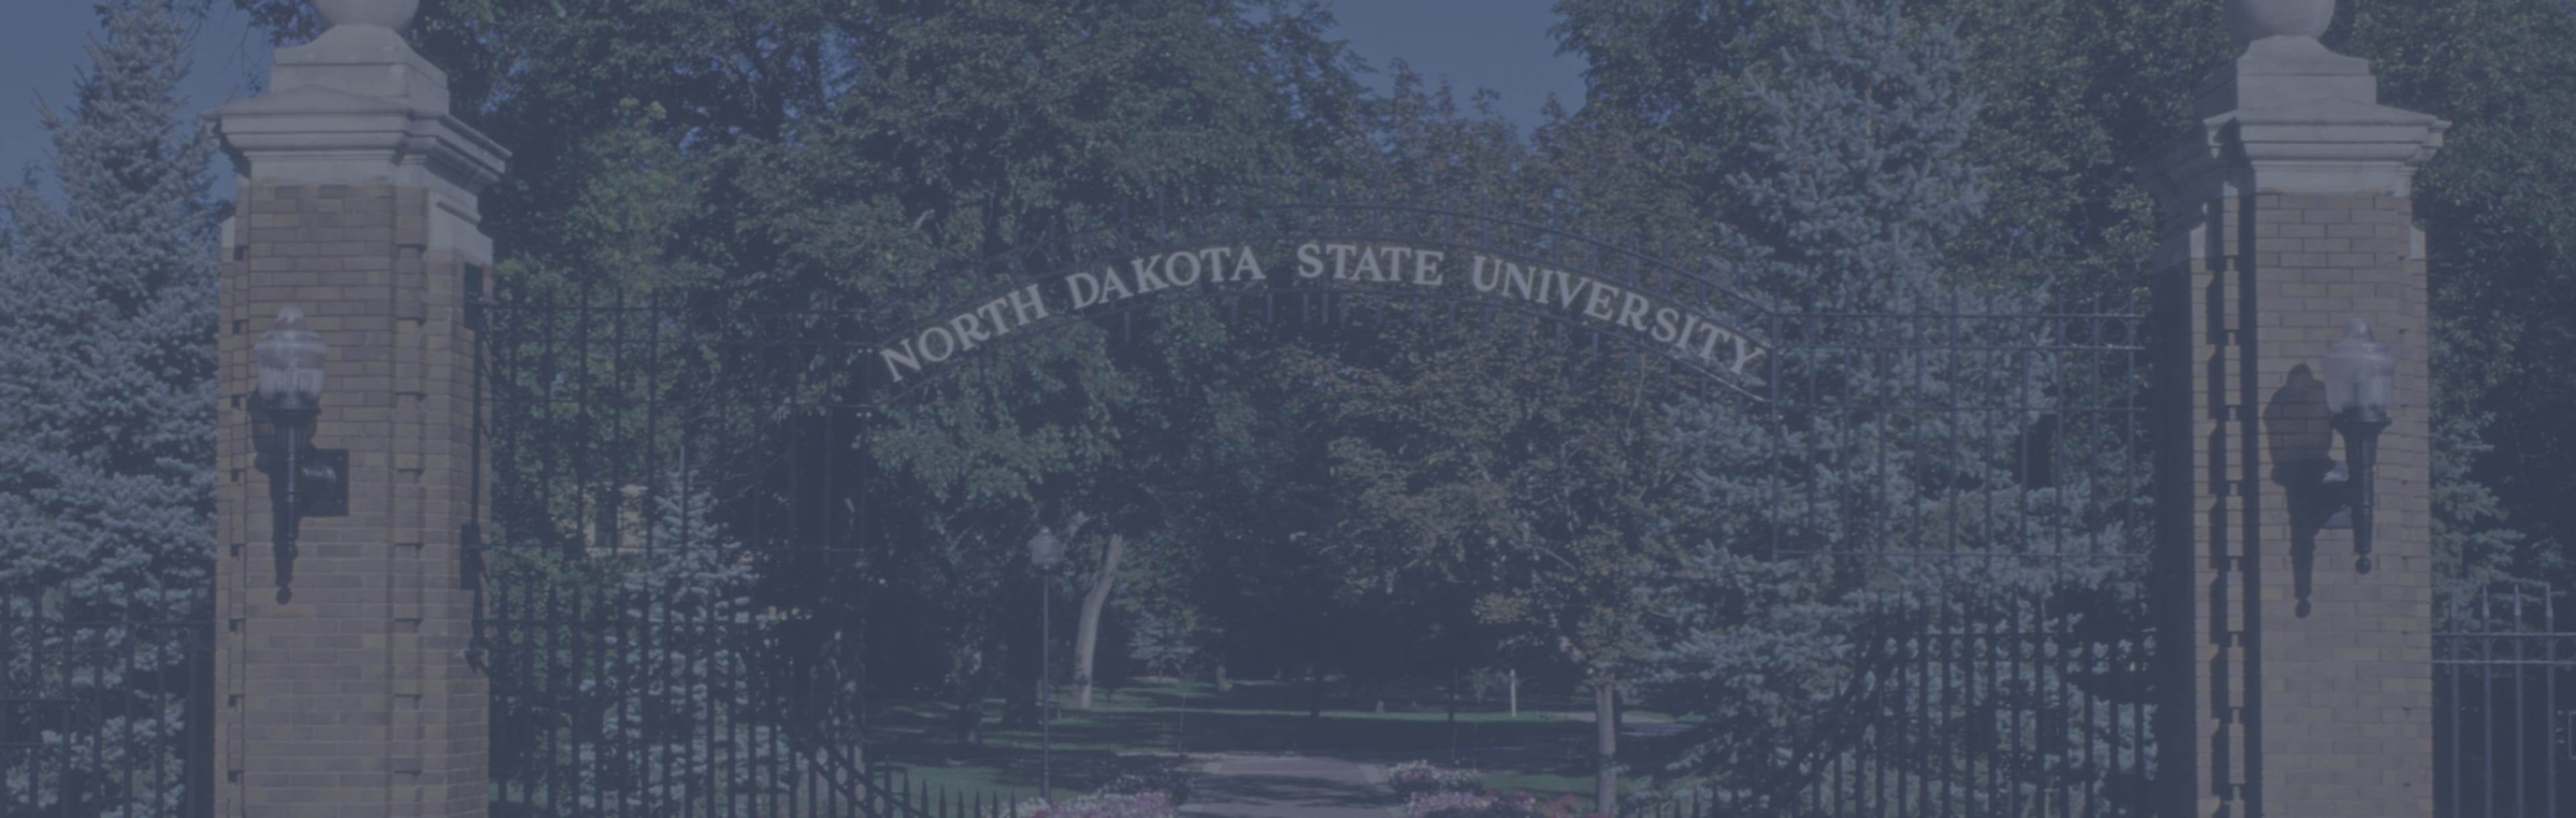 North Dakota State University - Graduate School Ph.D. solu- ja molekyylibiologiassa